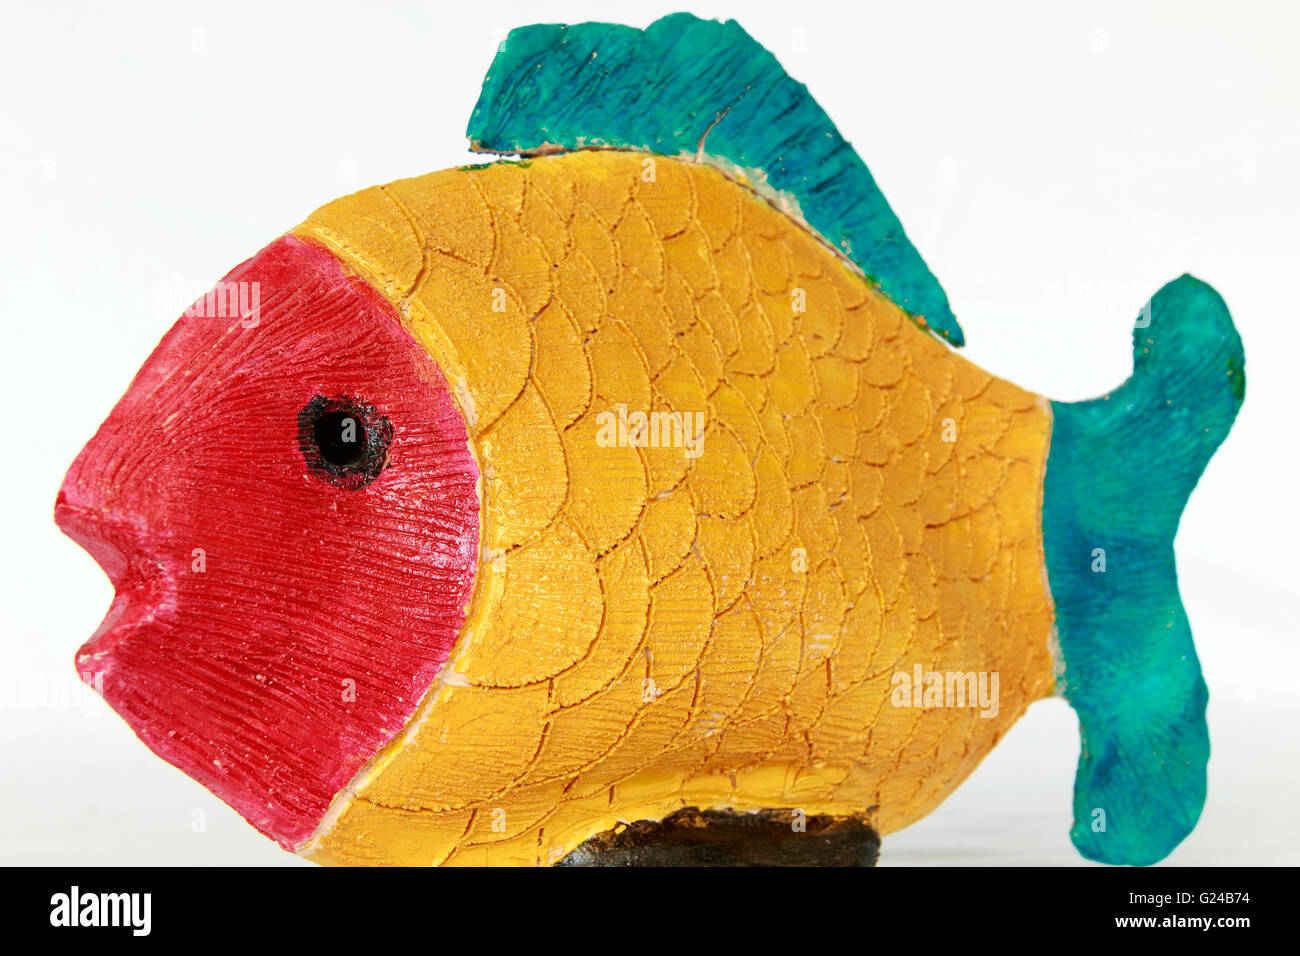 Ceramic fish sculpture pottery Stock Photo - Alamy